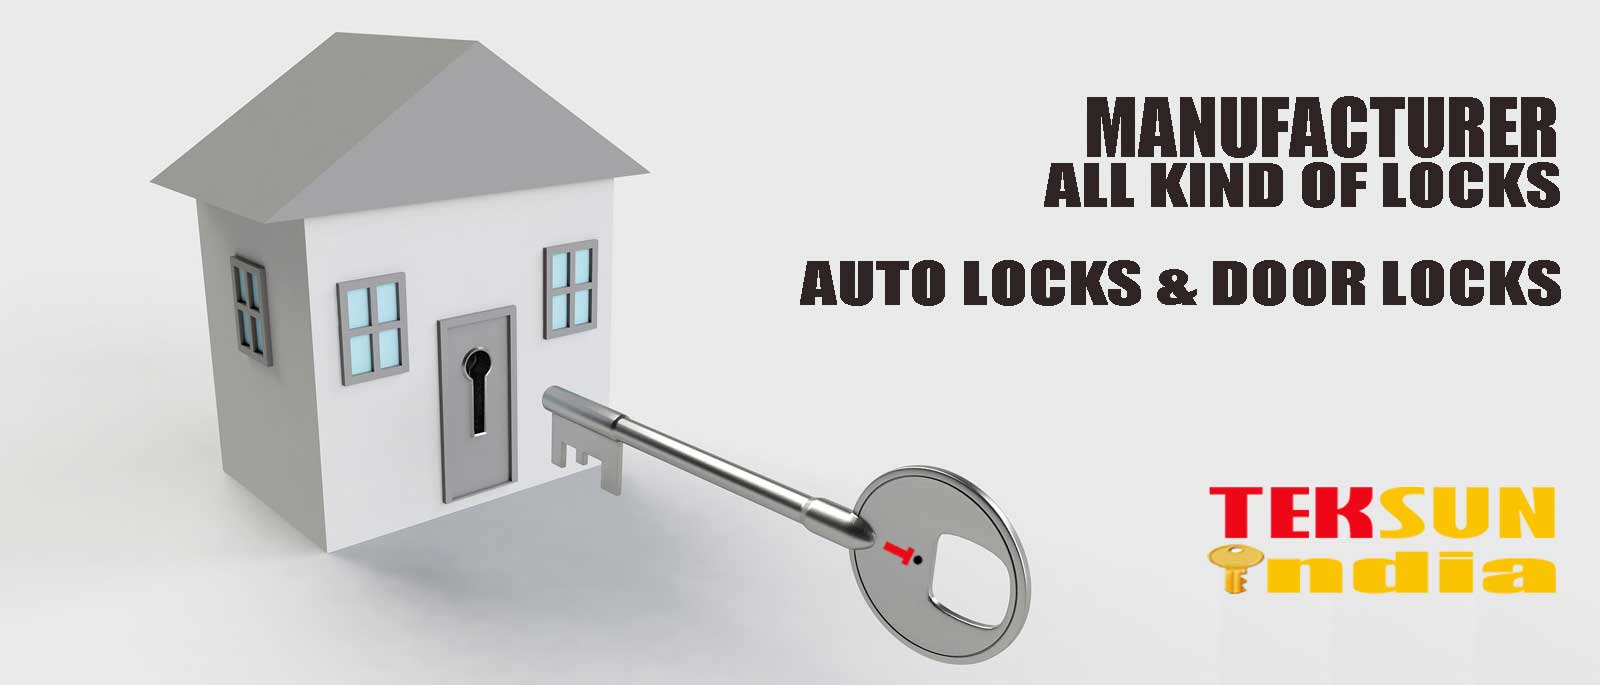 Bus lock, truck lock & bike lock manufacturer